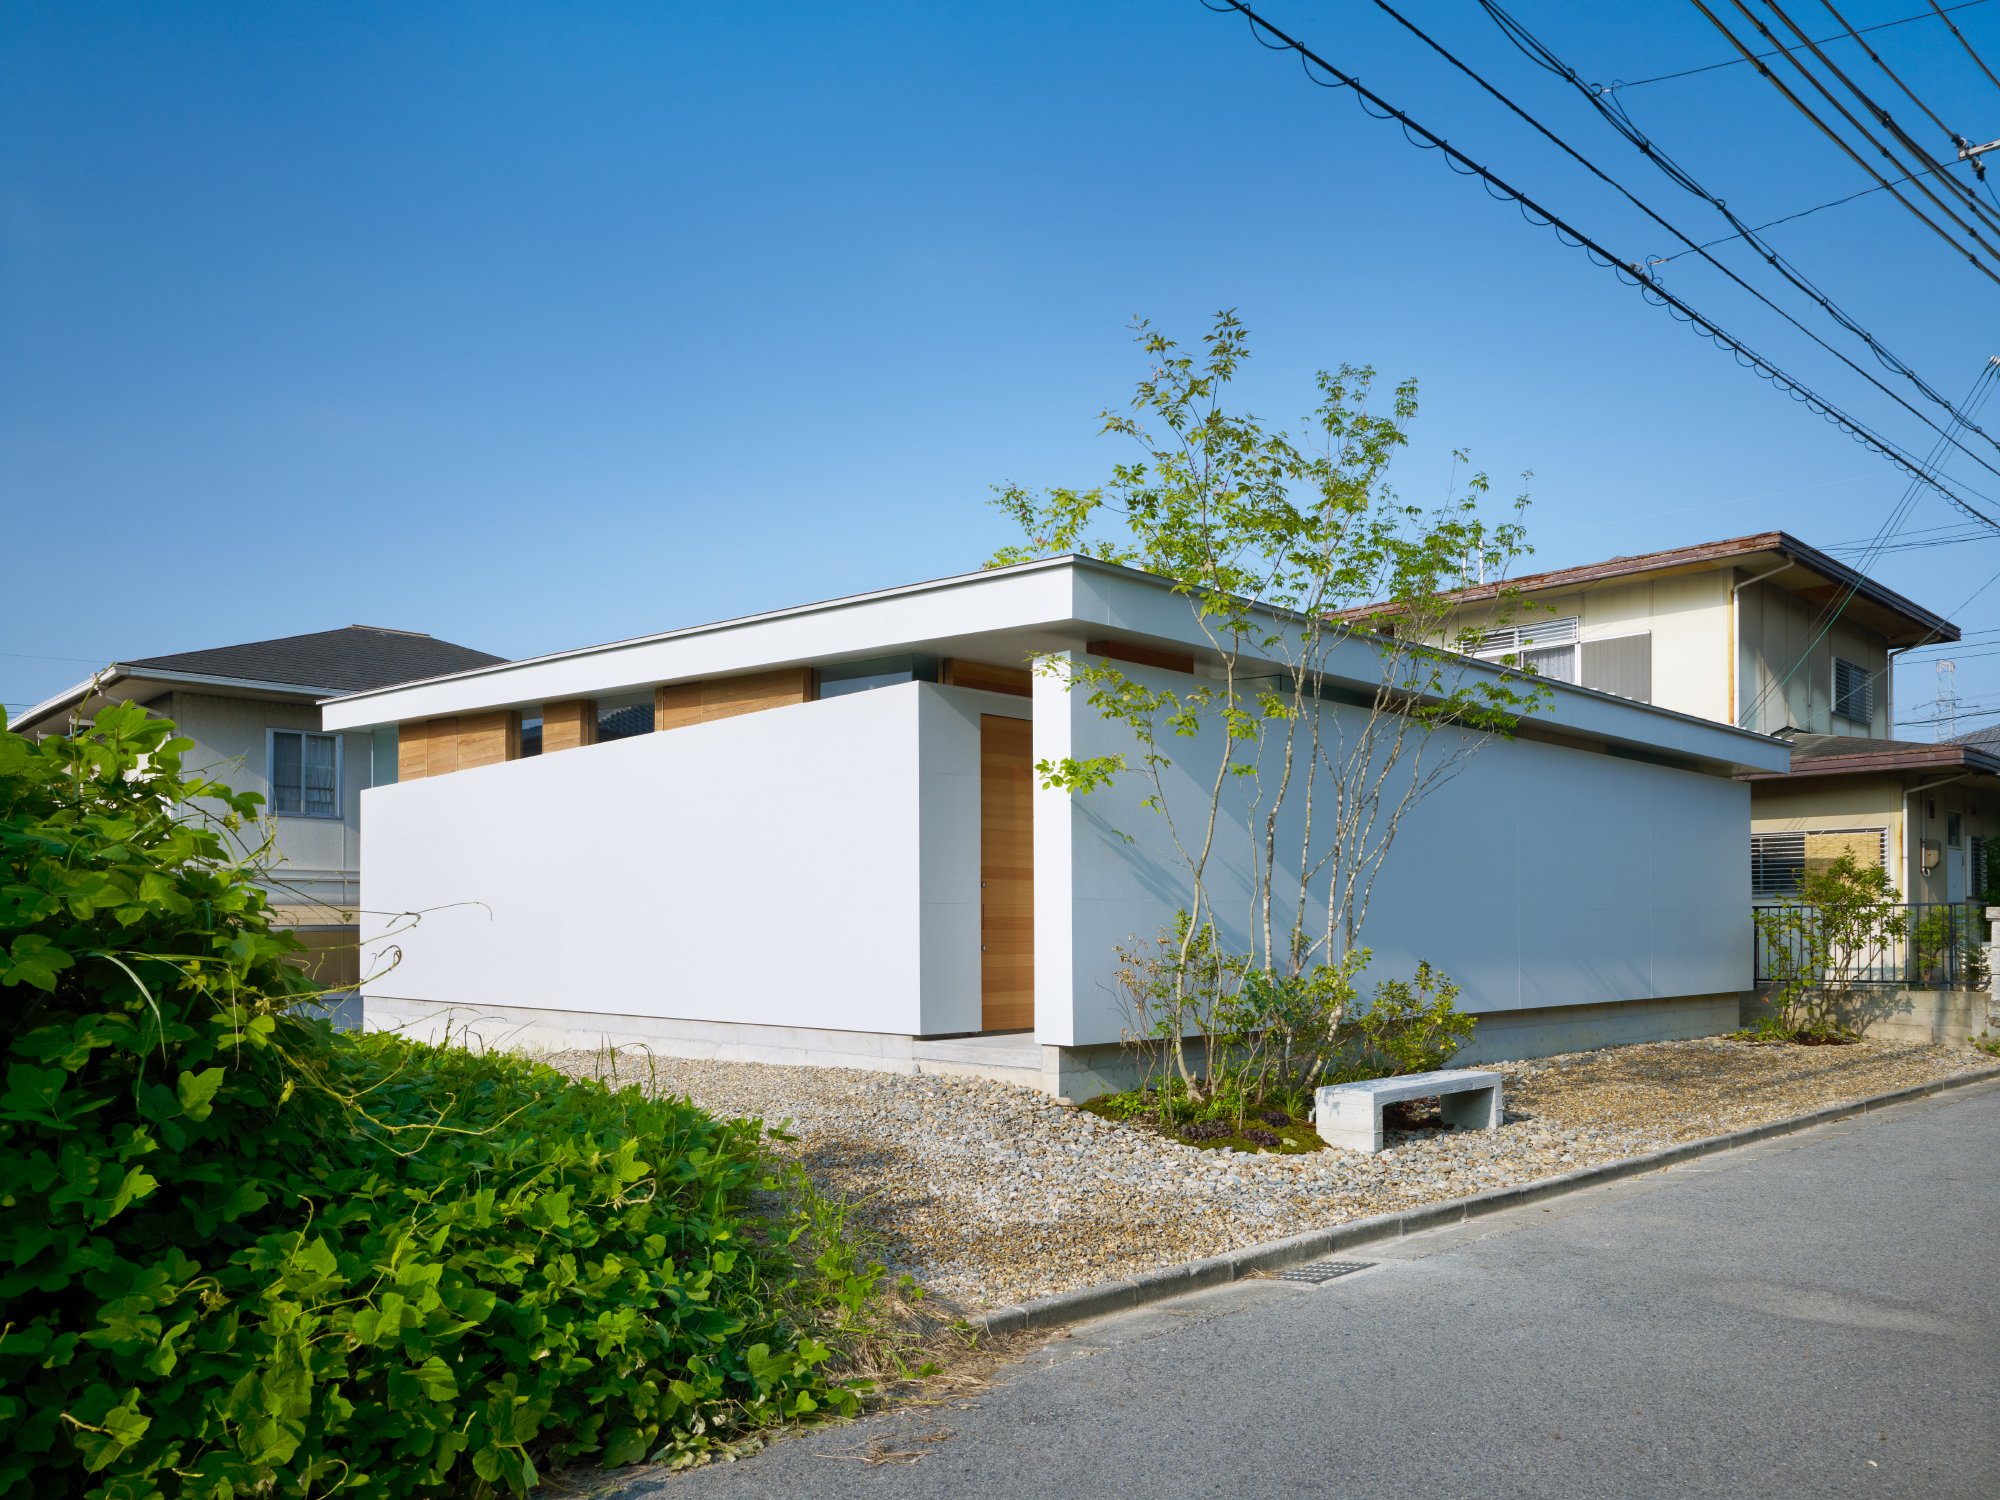 House in Sekiya by Fujiwaramuro Architects